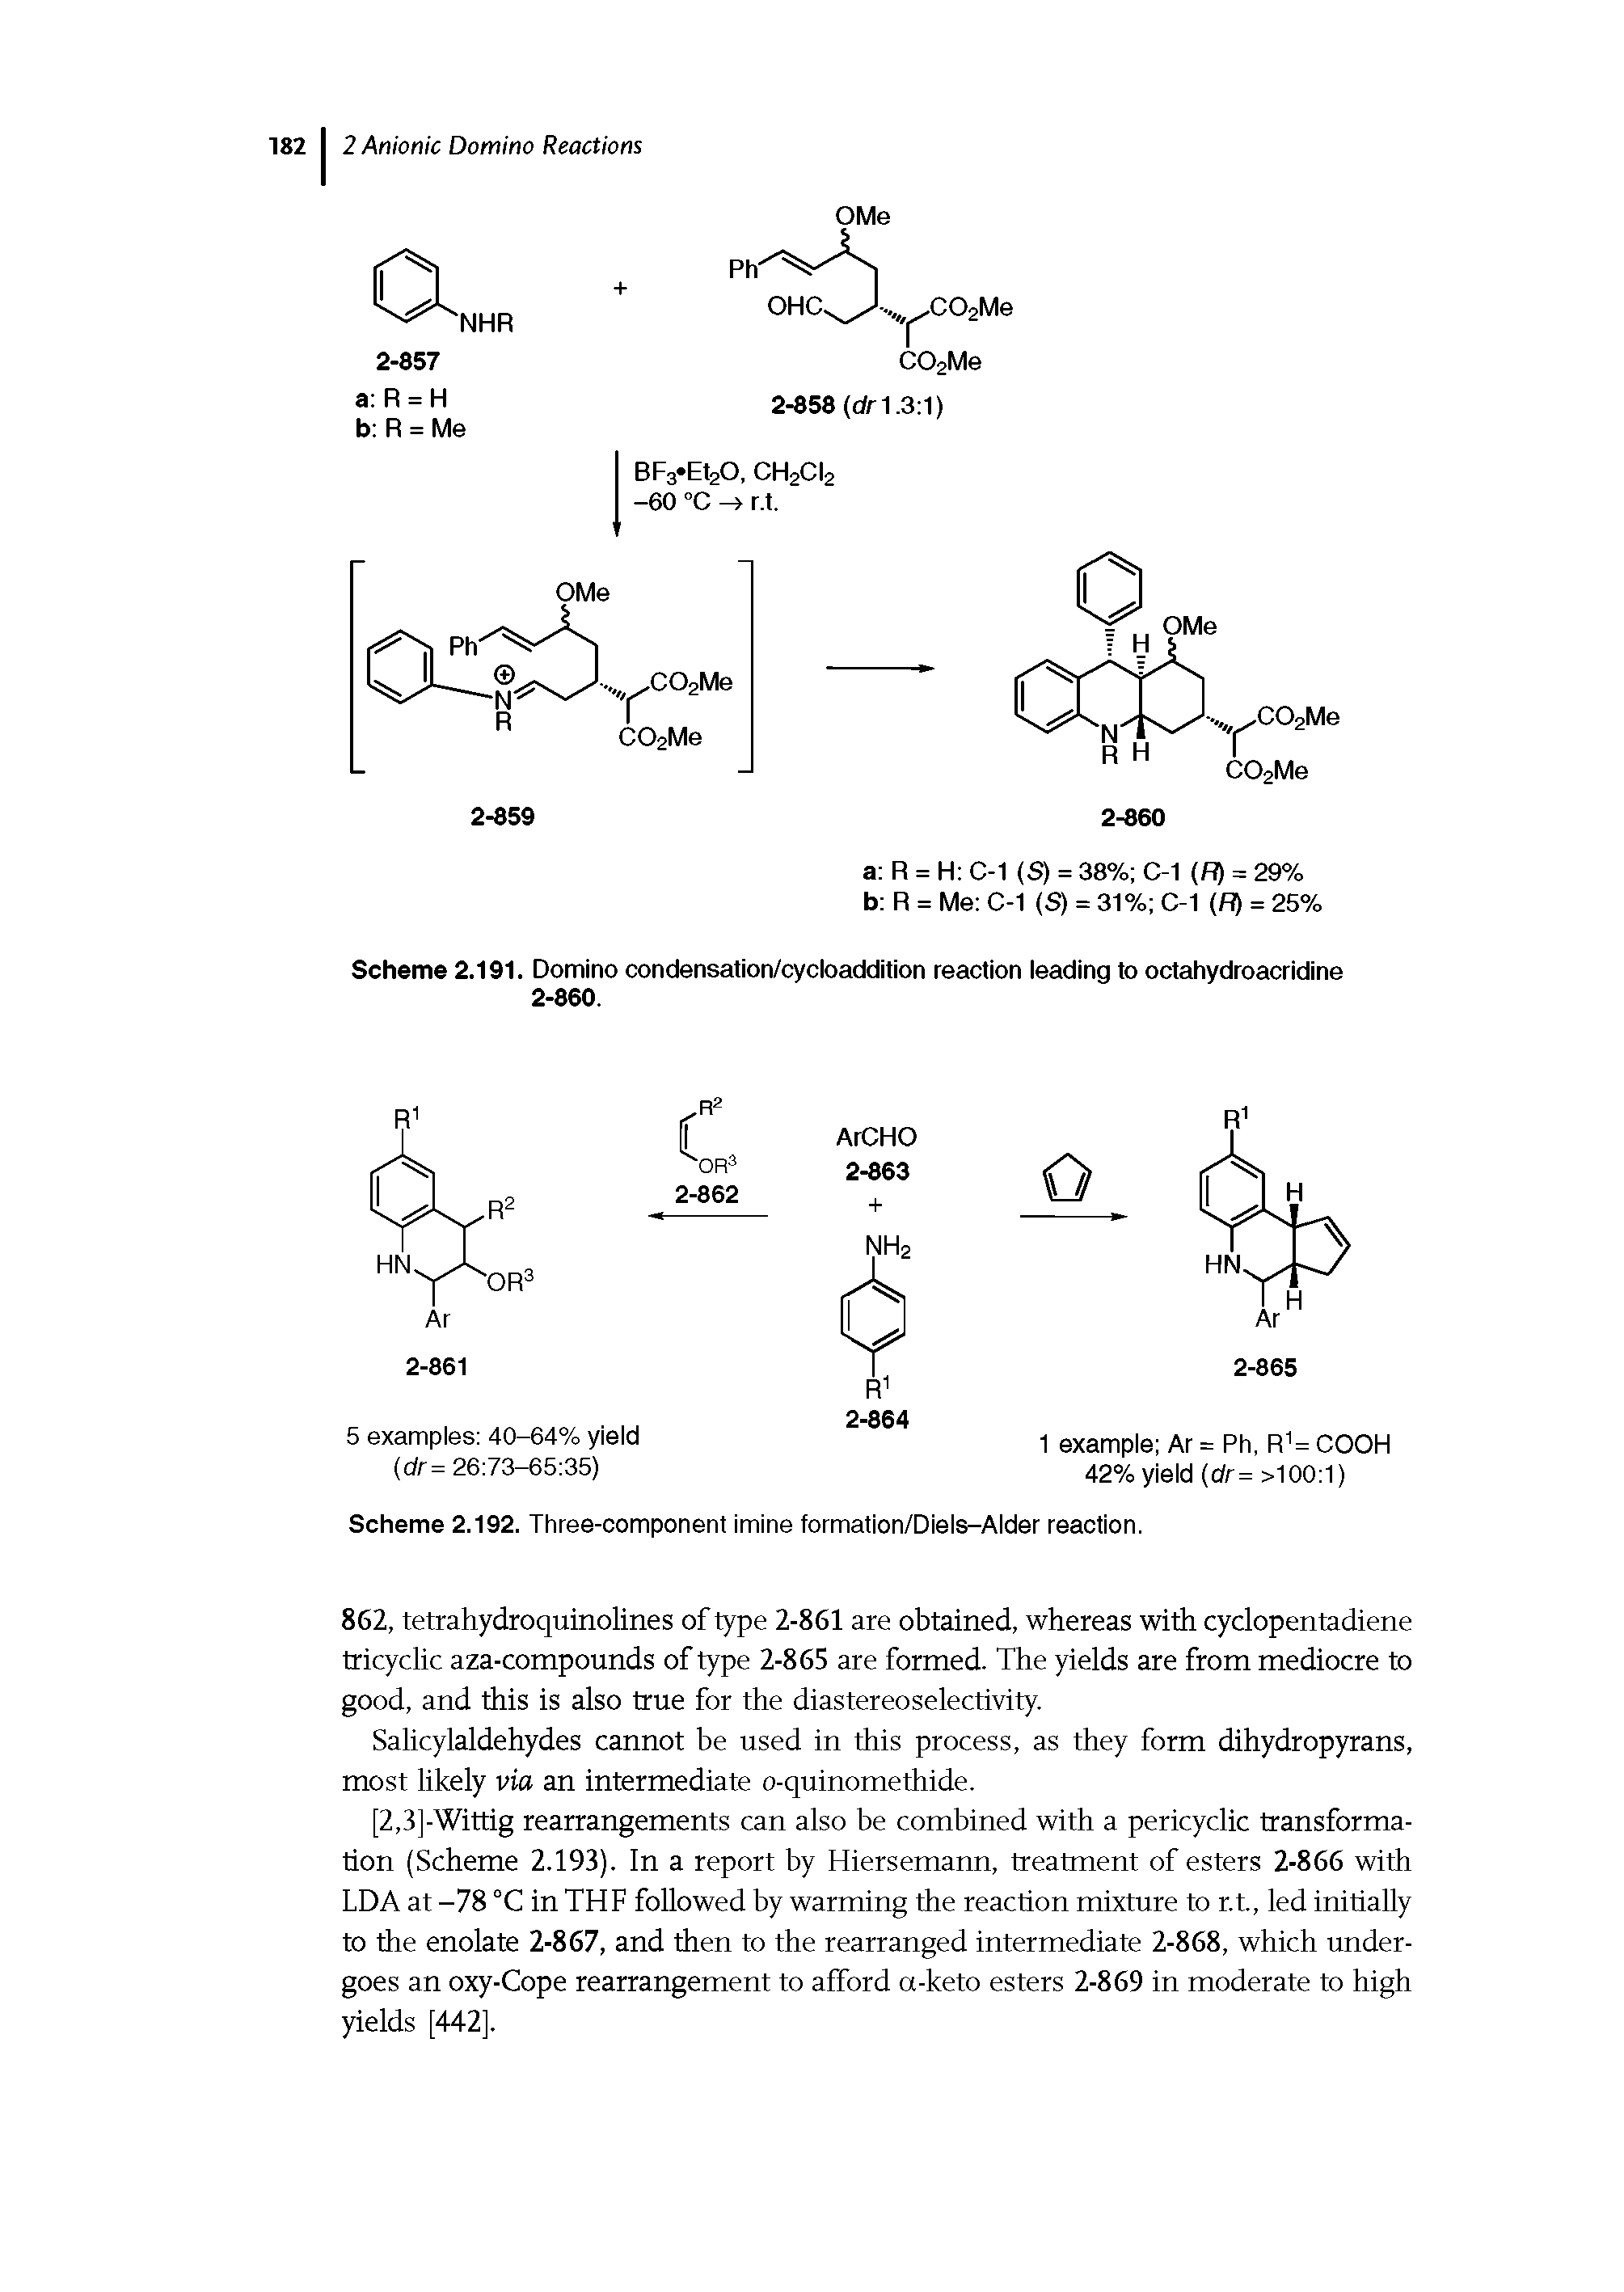 Scheme 2.191. Domino condensation/cycloaddition reaction leading to octahydroacridine 2-860.